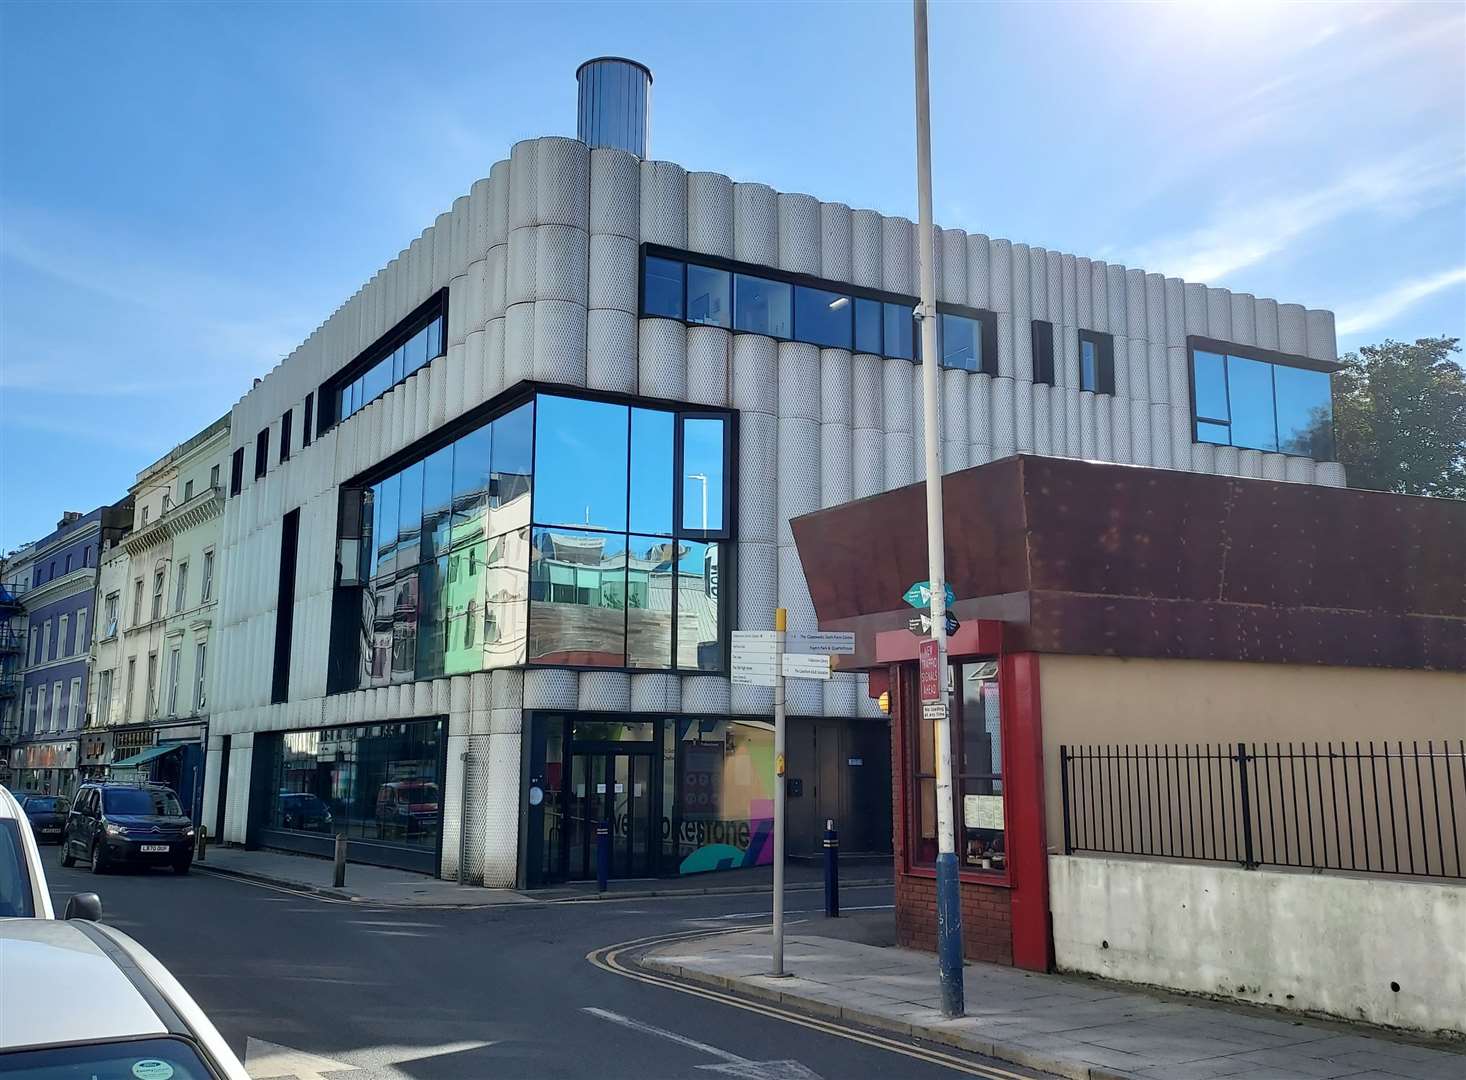 The Quarterhouse arts venue in Tontine Street, Folkestone